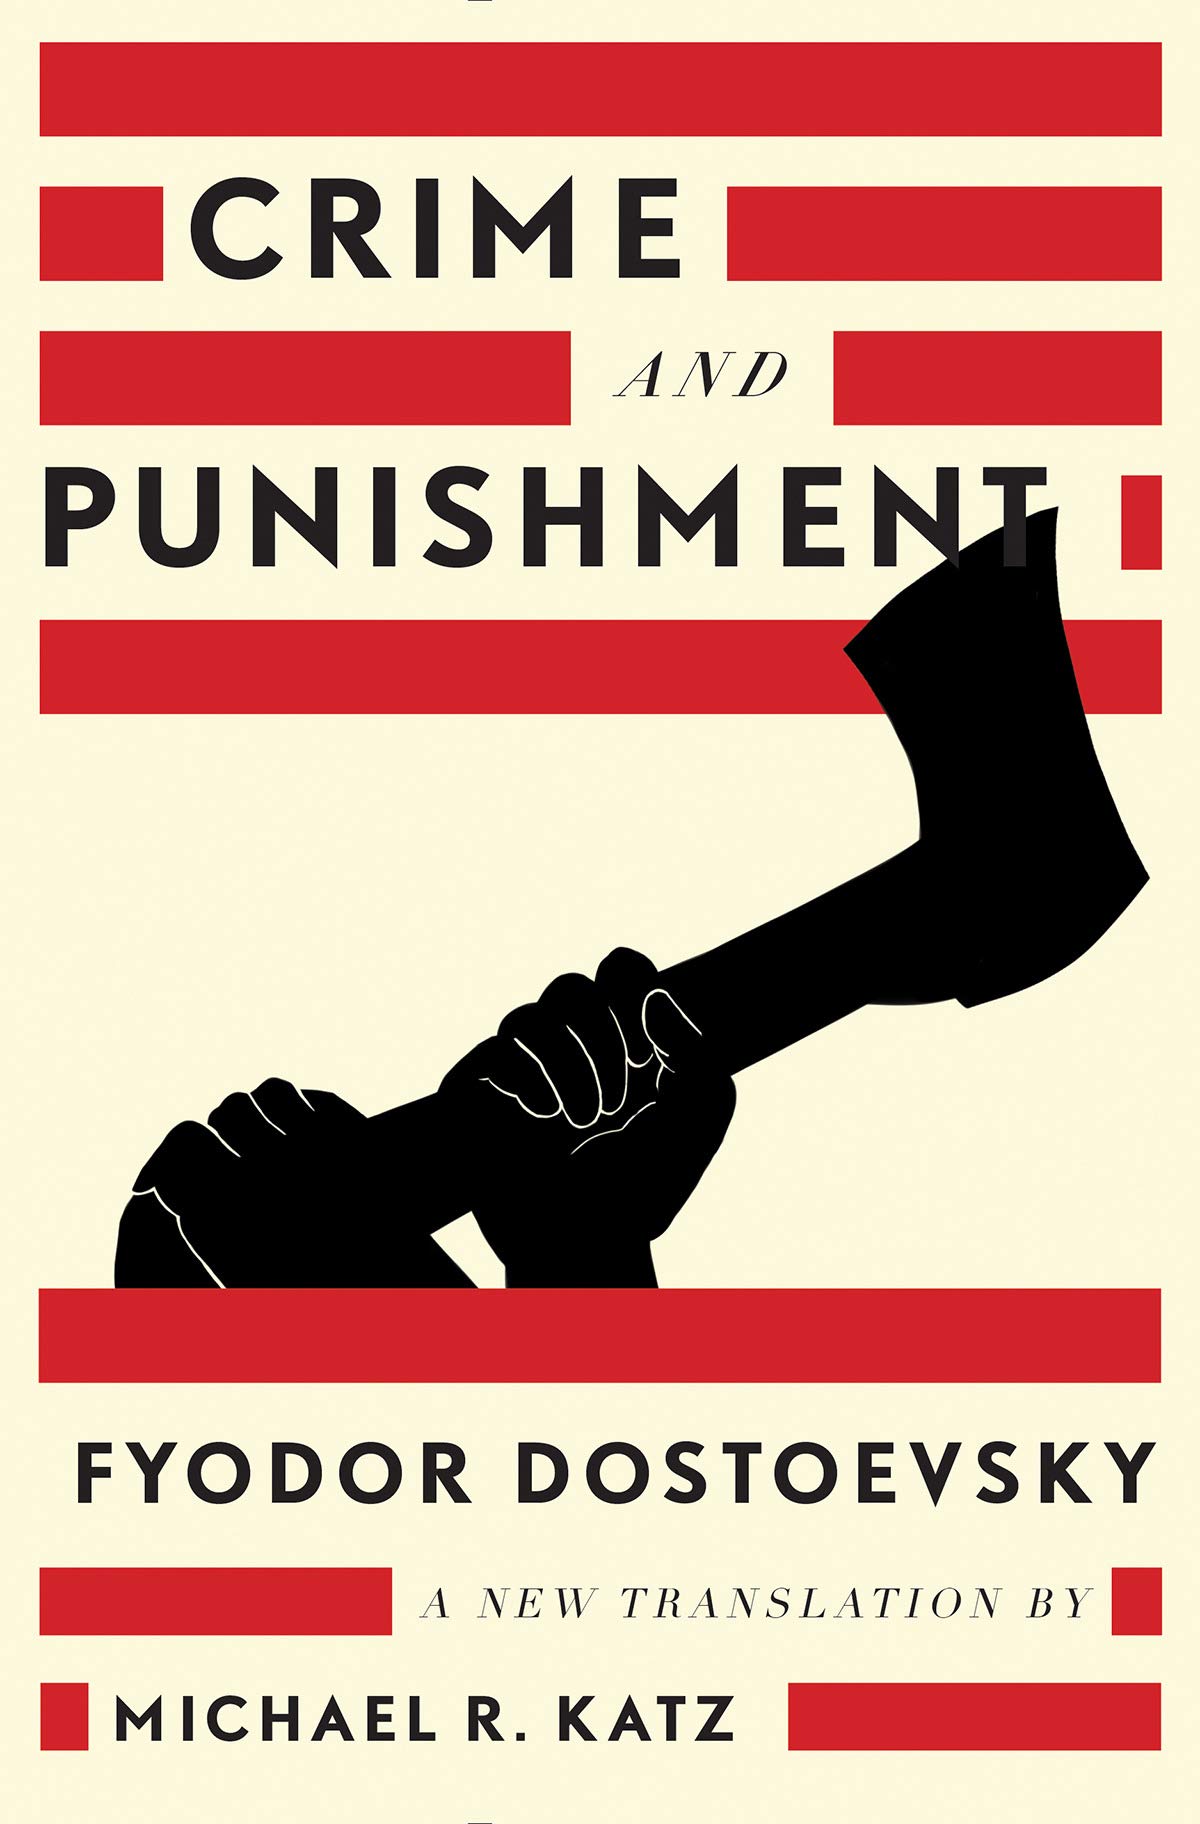 argumentative essay on crime and punishment